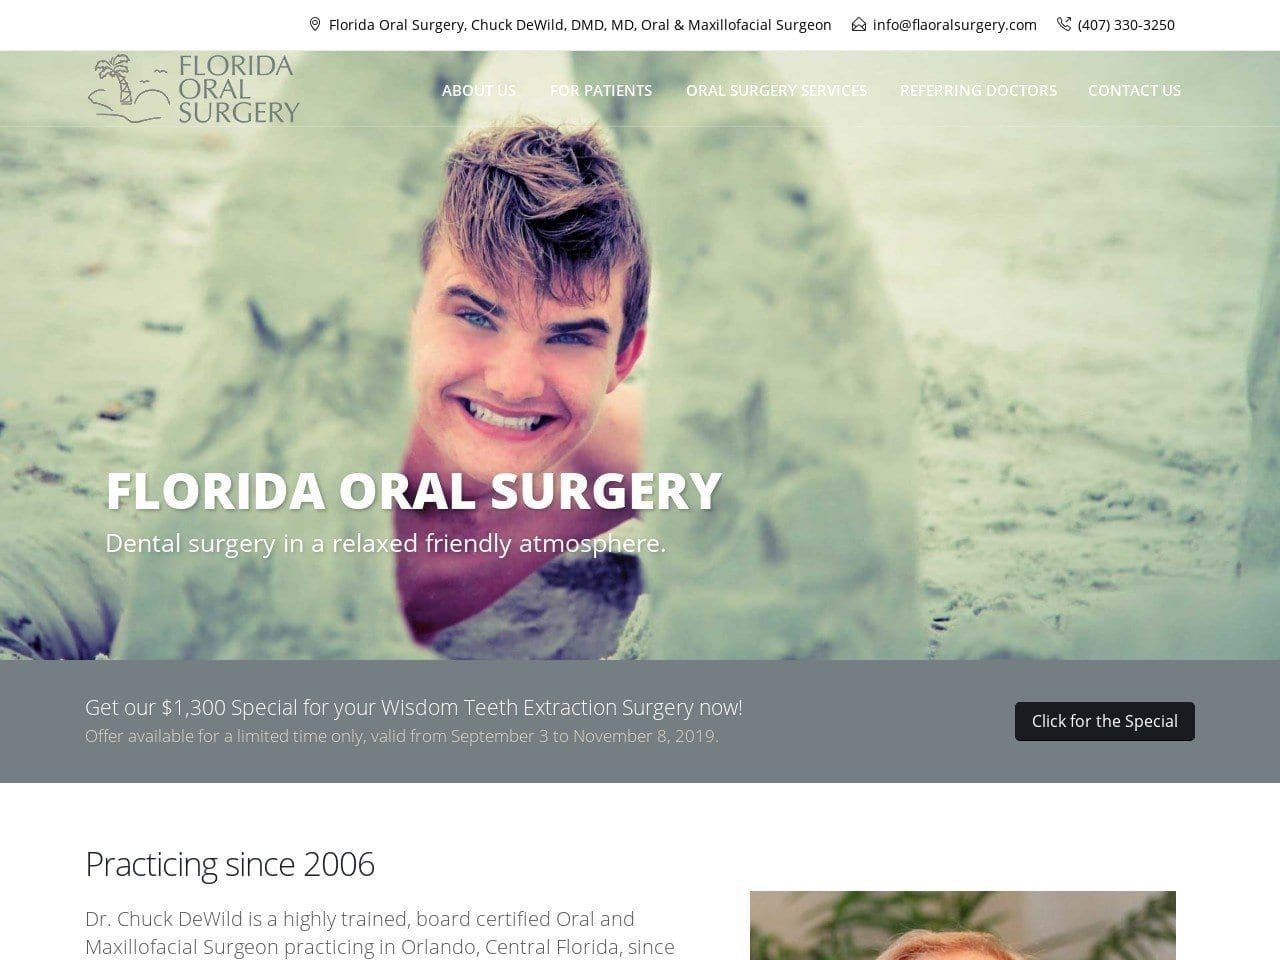 Wisdom Teeth Oral Surgery Services Website Screenshot from flaoralsurgery.com